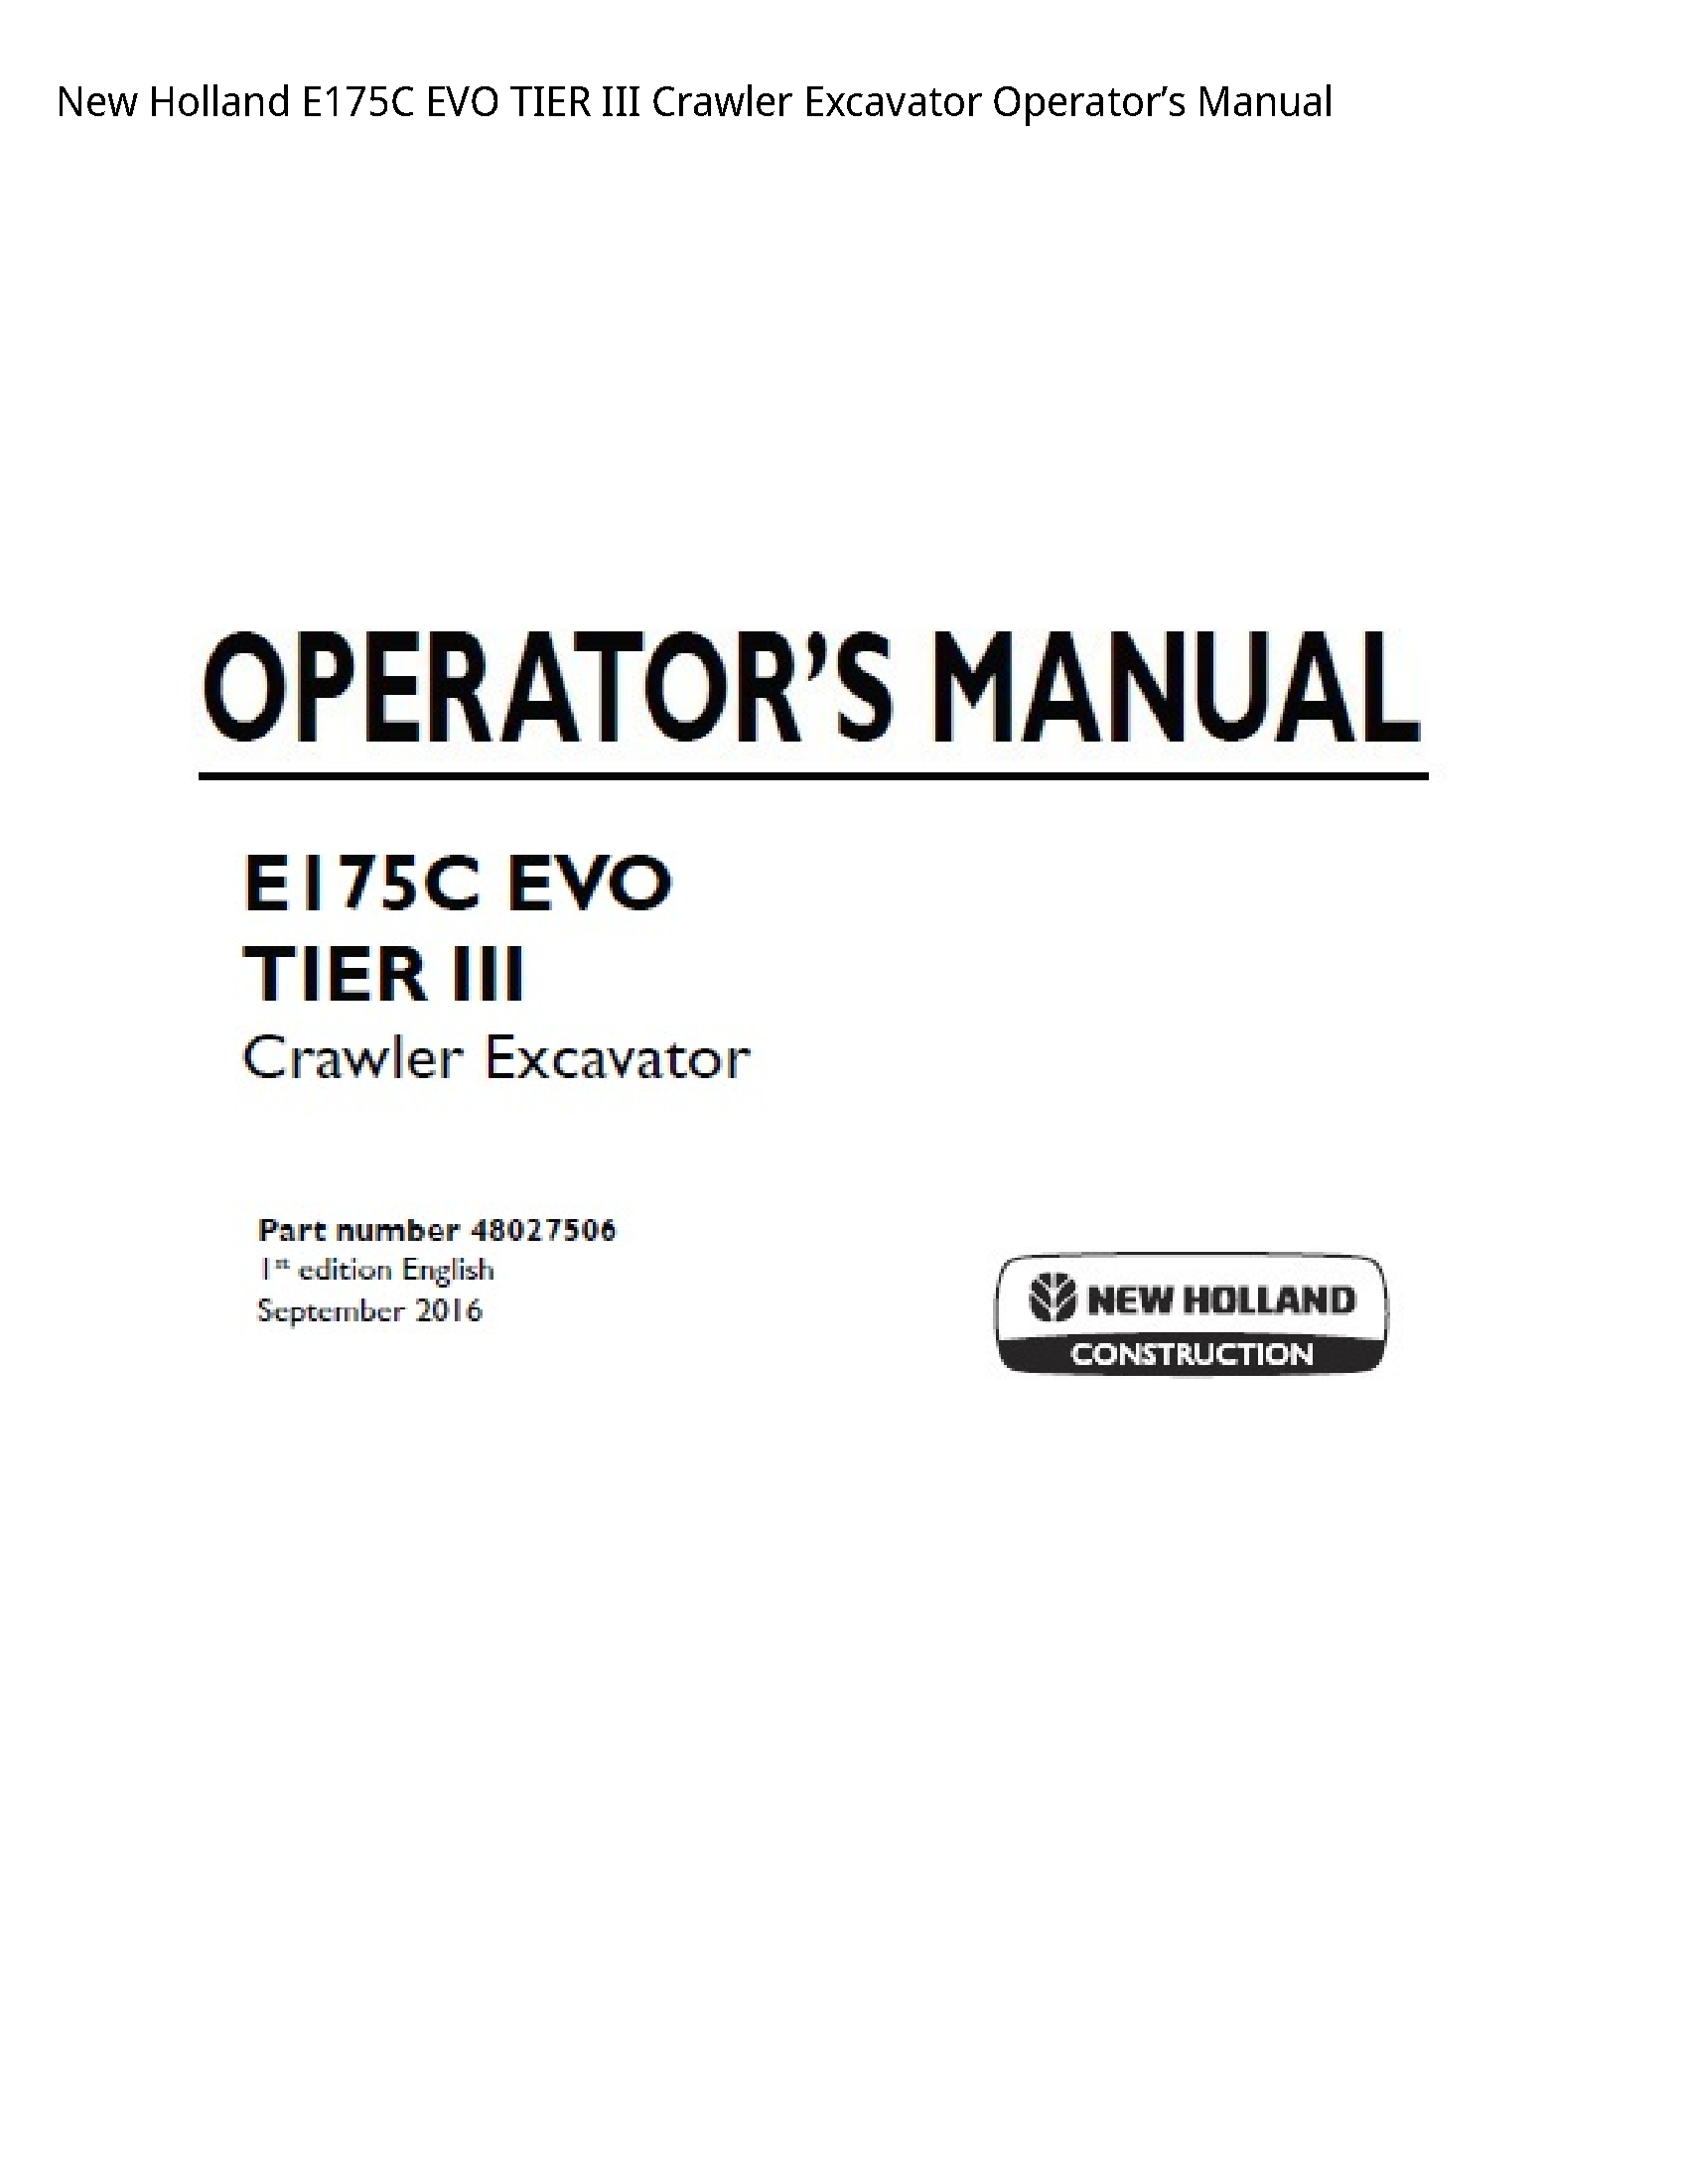 New Holland E175C EVO TIER III Crawler Excavator Operator’s manual